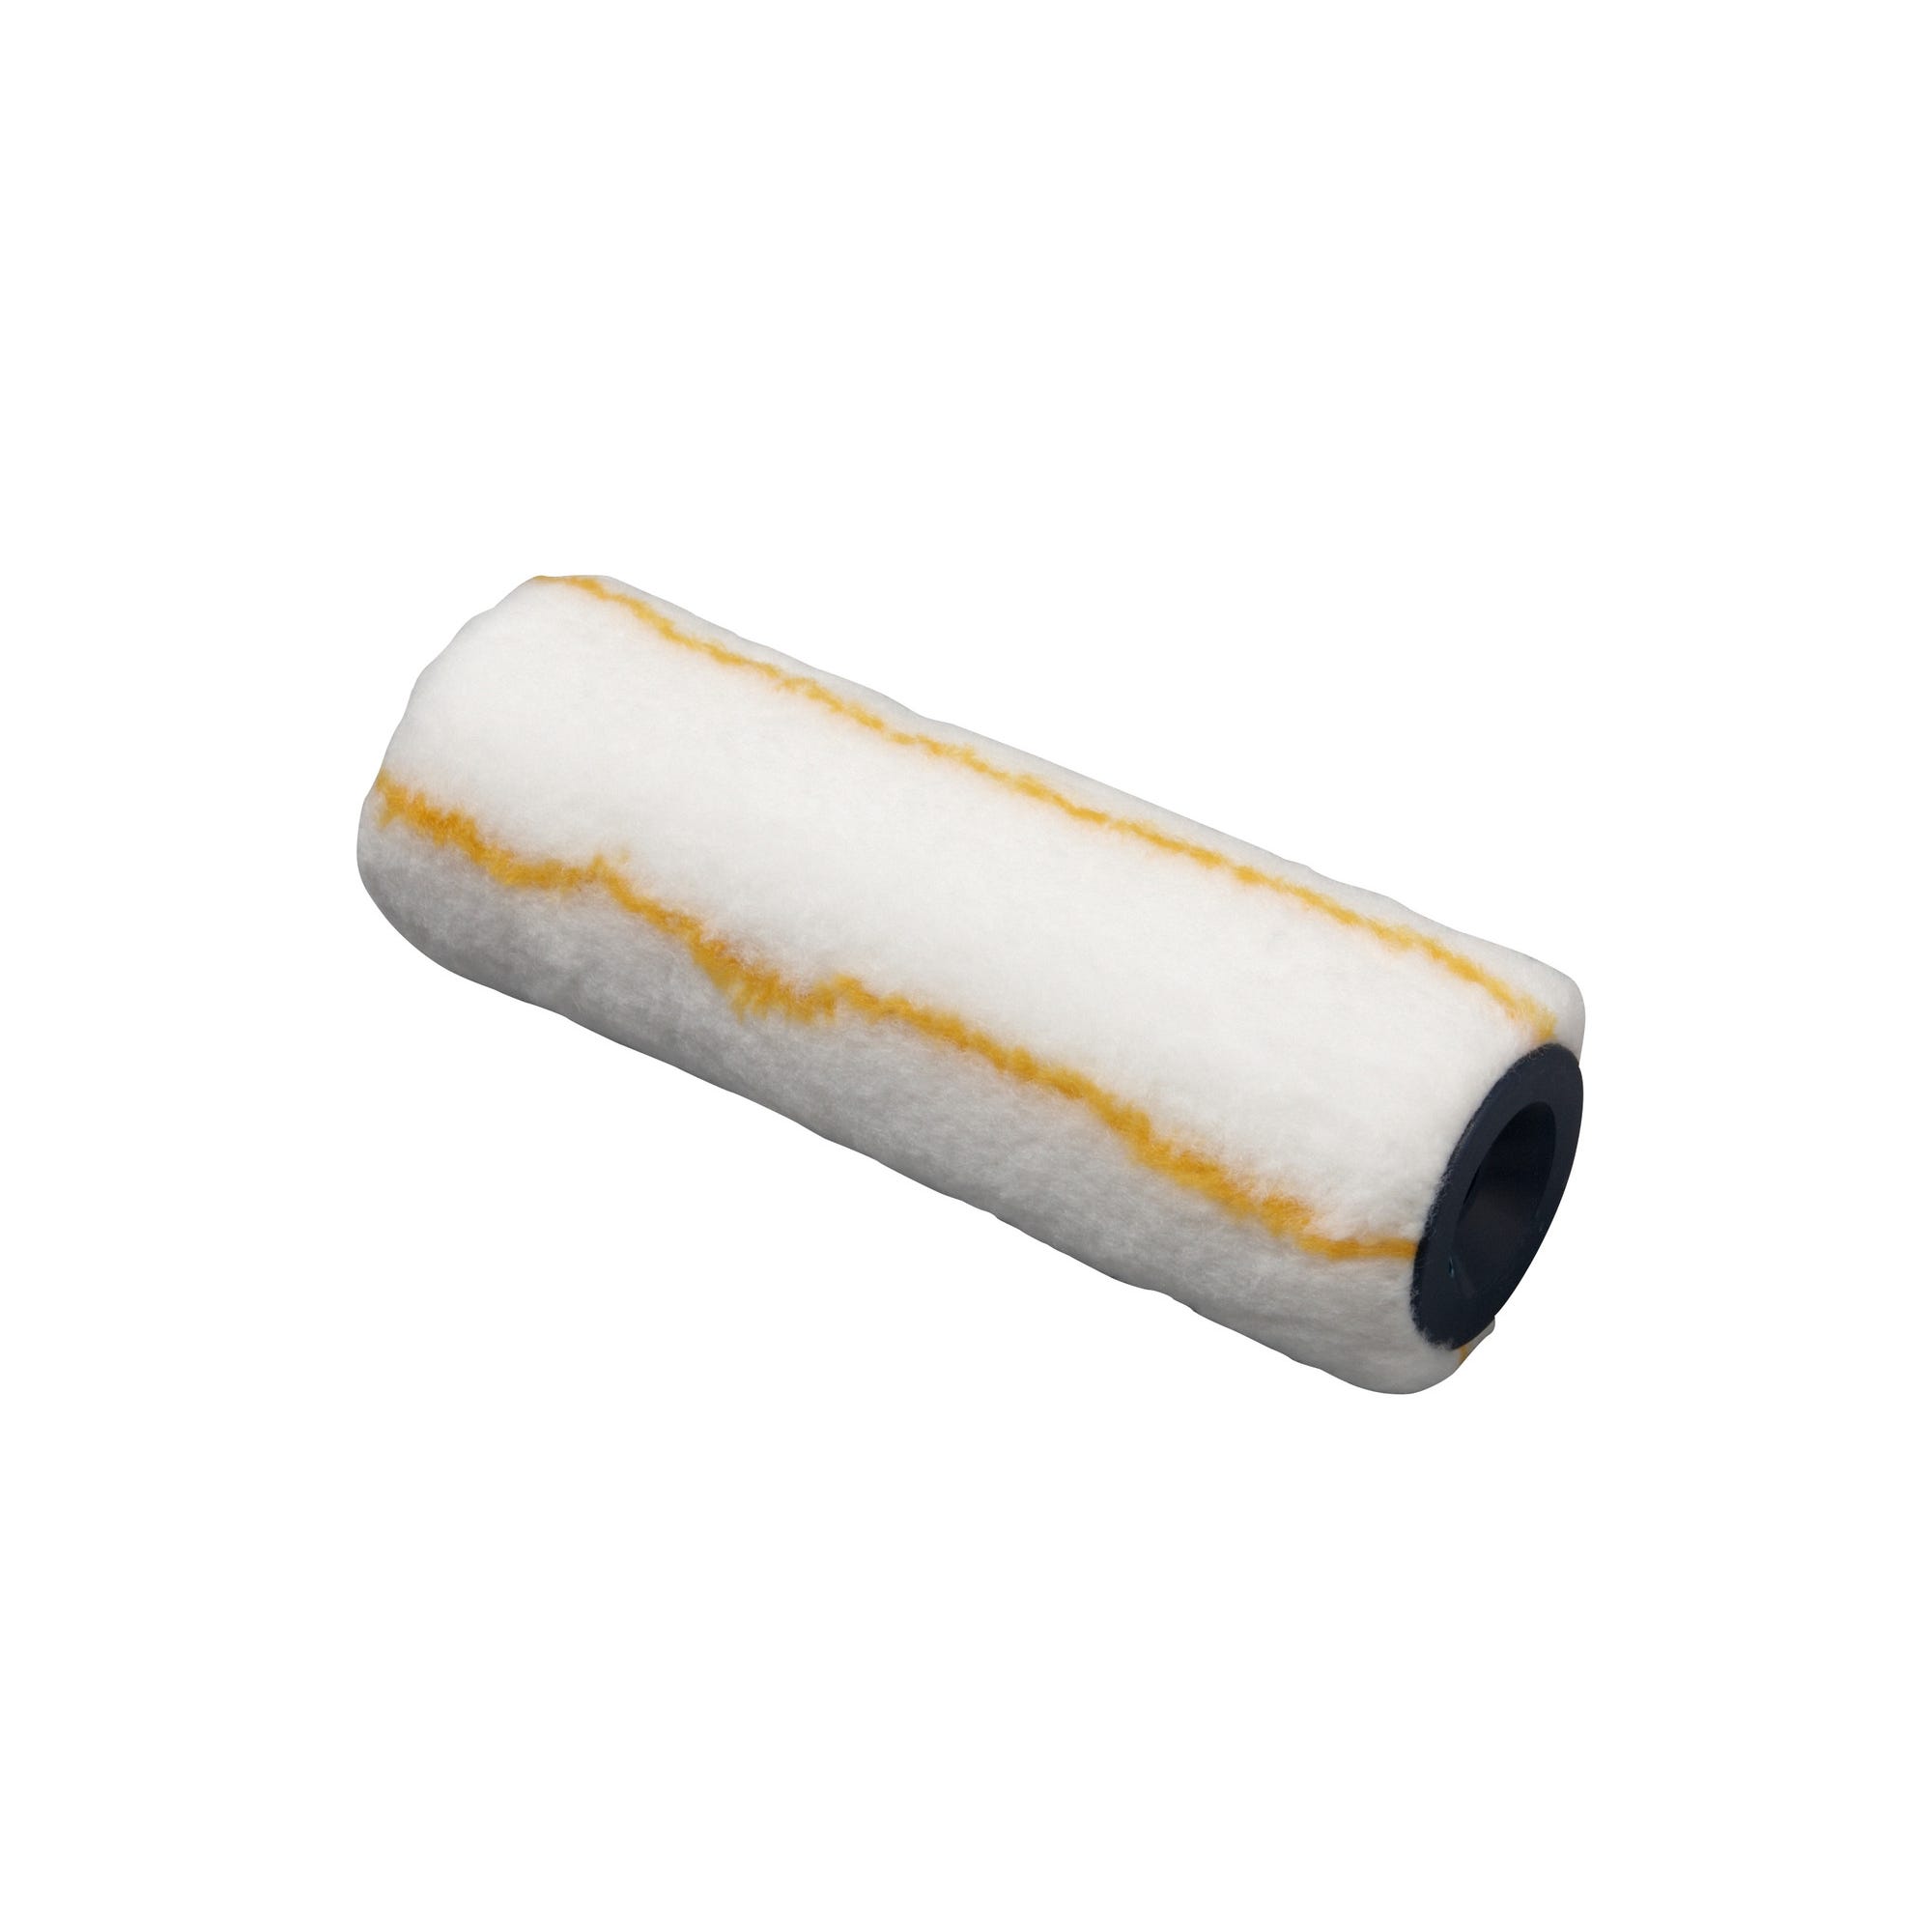 Manchon polyamide méché 12 mm surfaces régulières long.180 mm, Goldfaden - ROTA 0